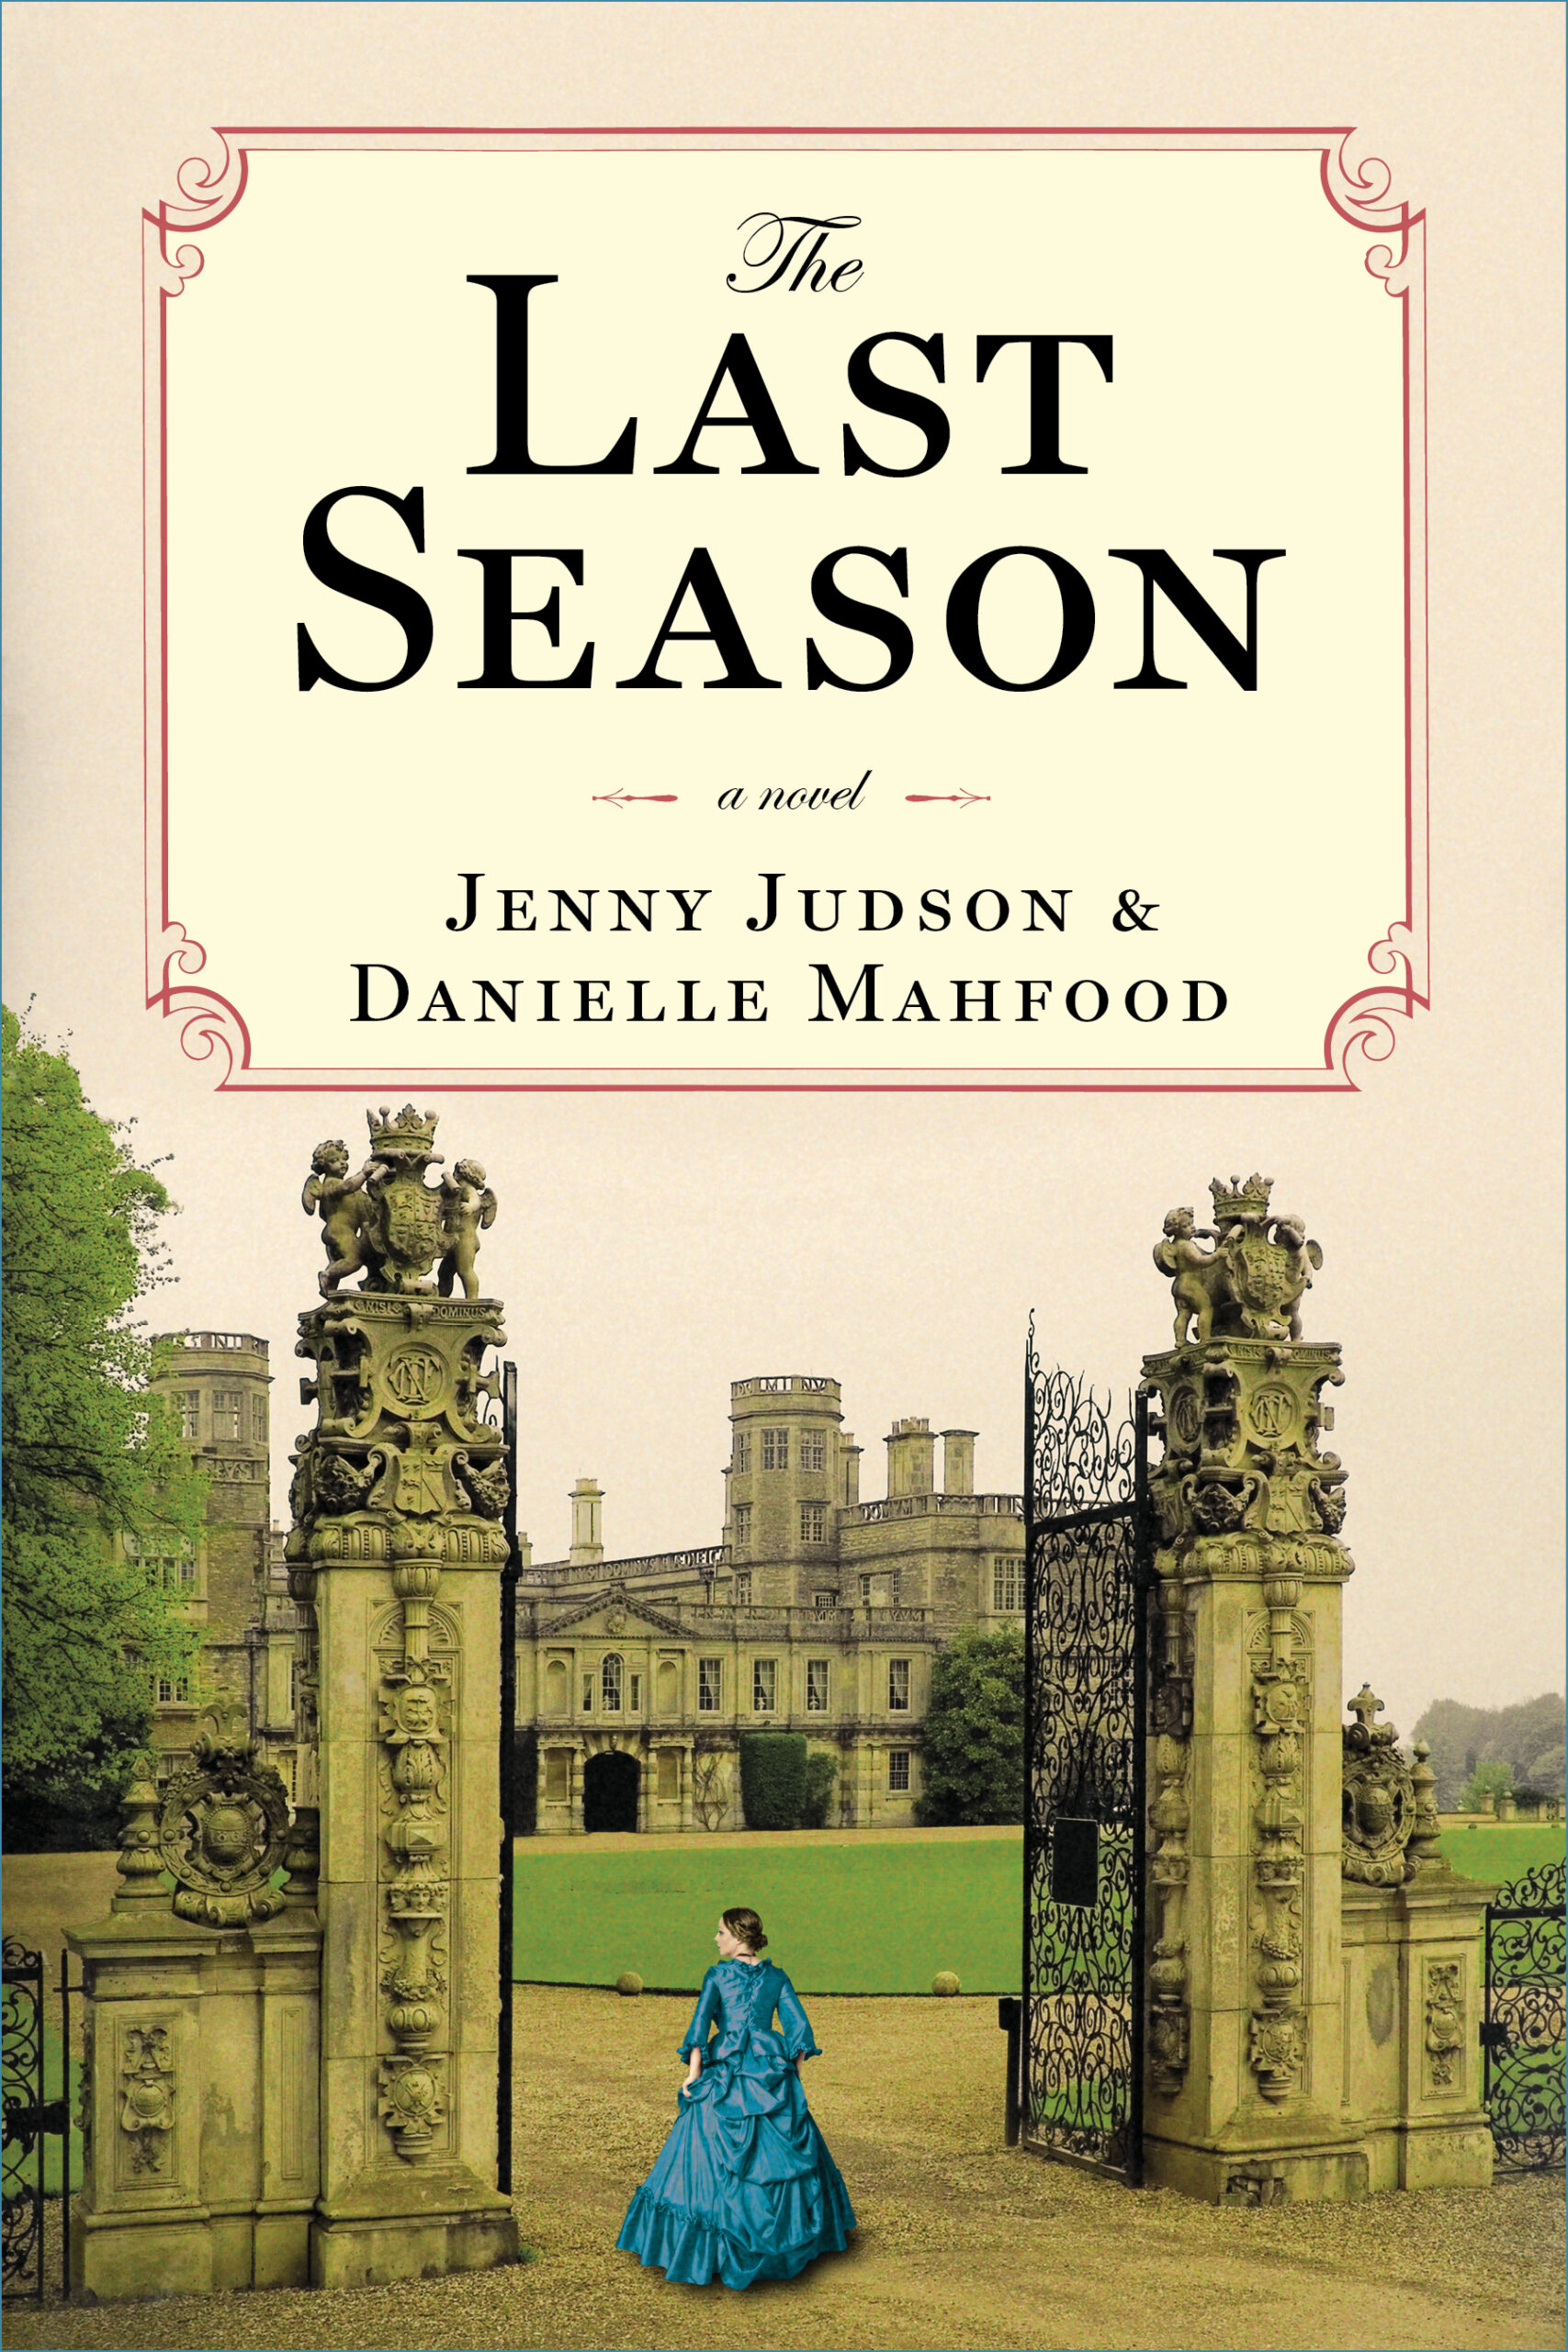 THE LAST SEASON Cover – Jenny Judson and Danielle Mahfood